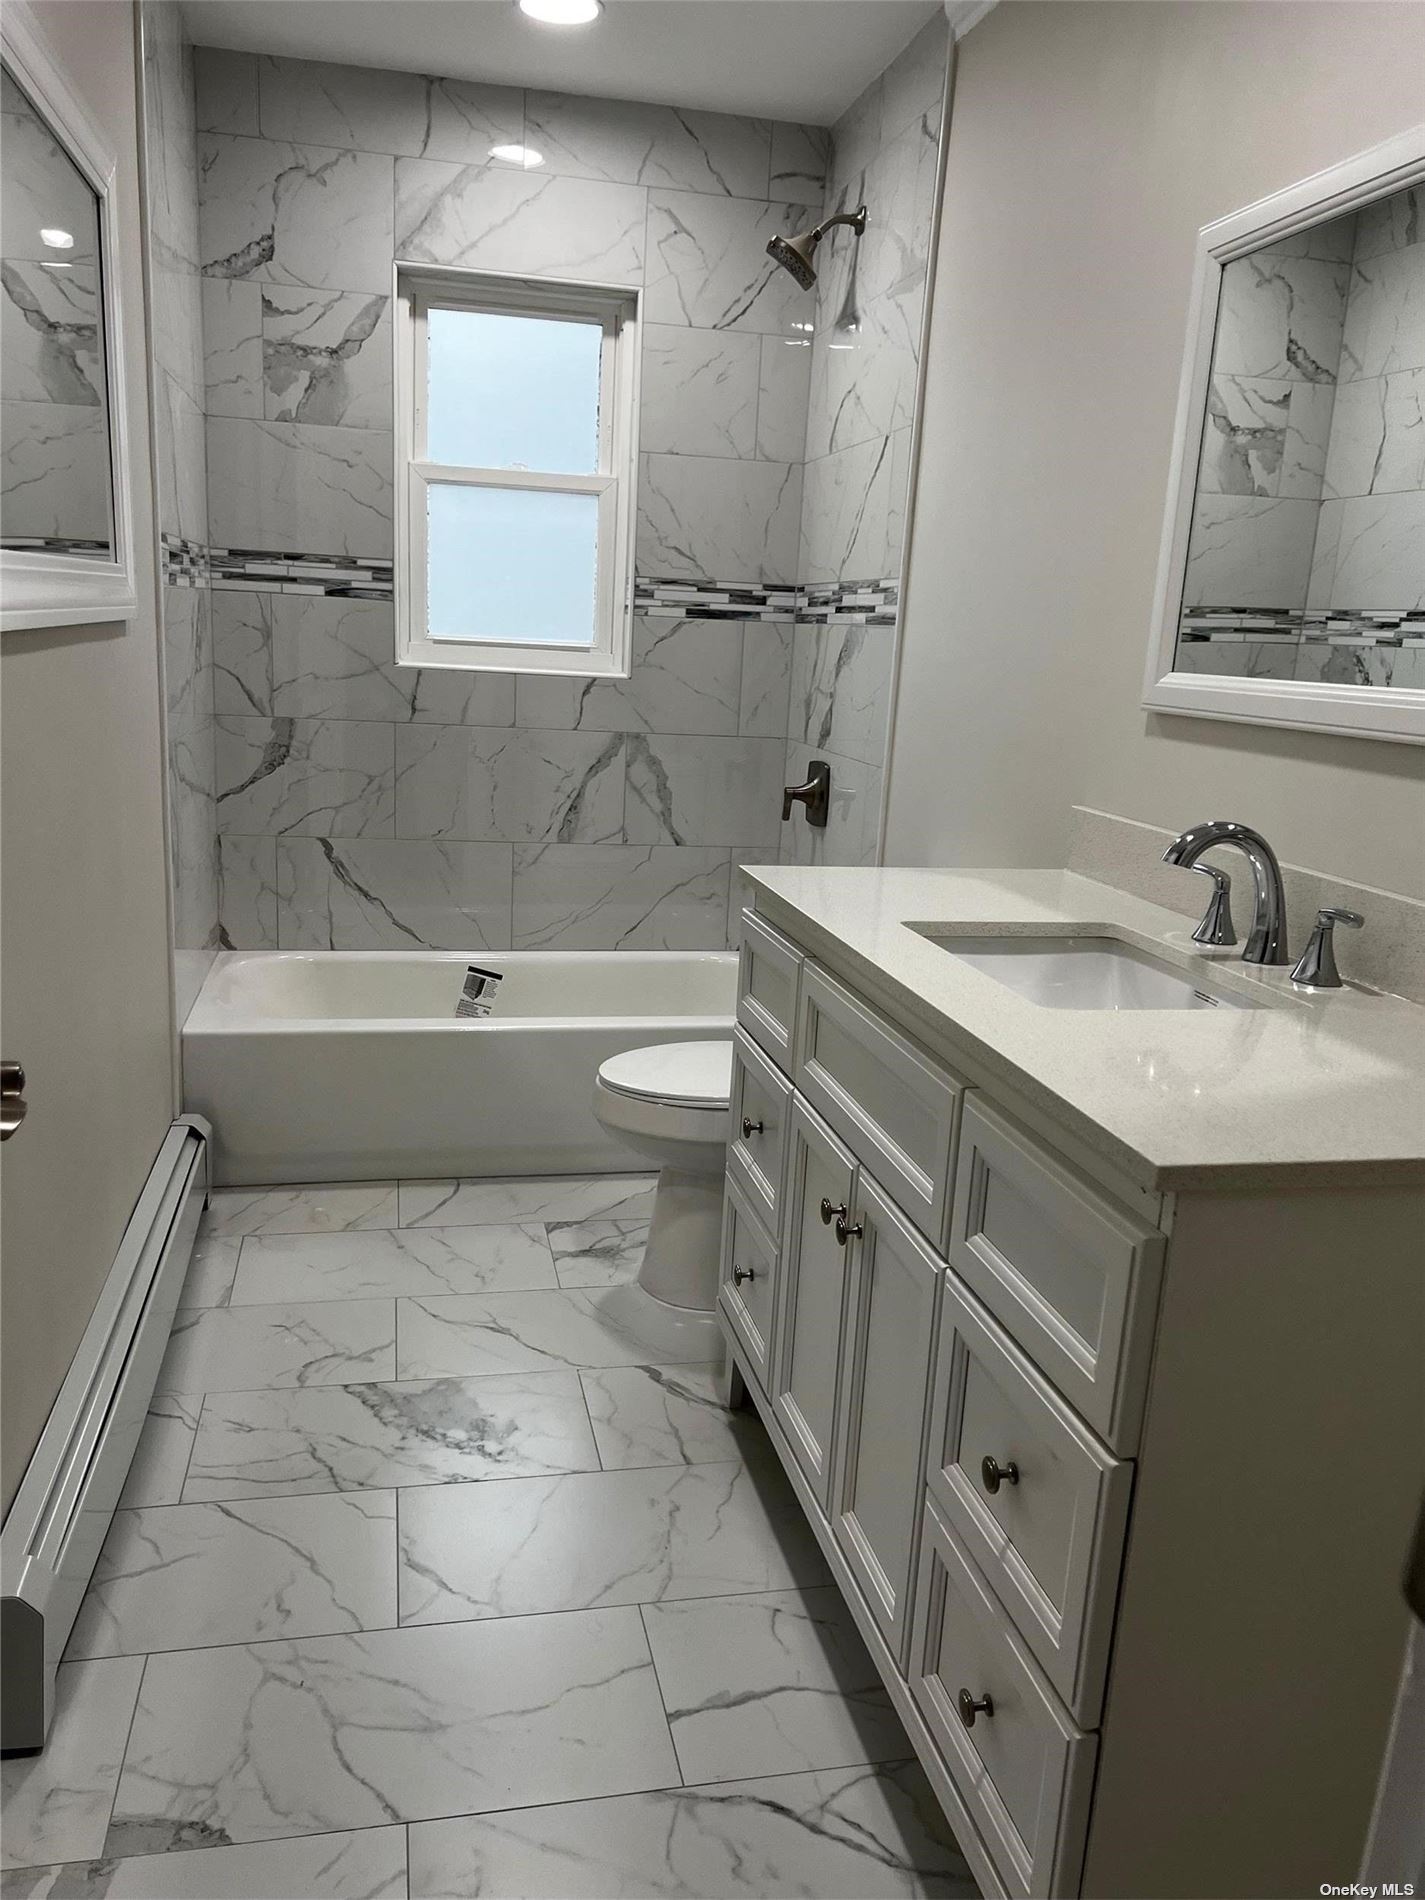 a bathroom with a sink a toilet and bathtub